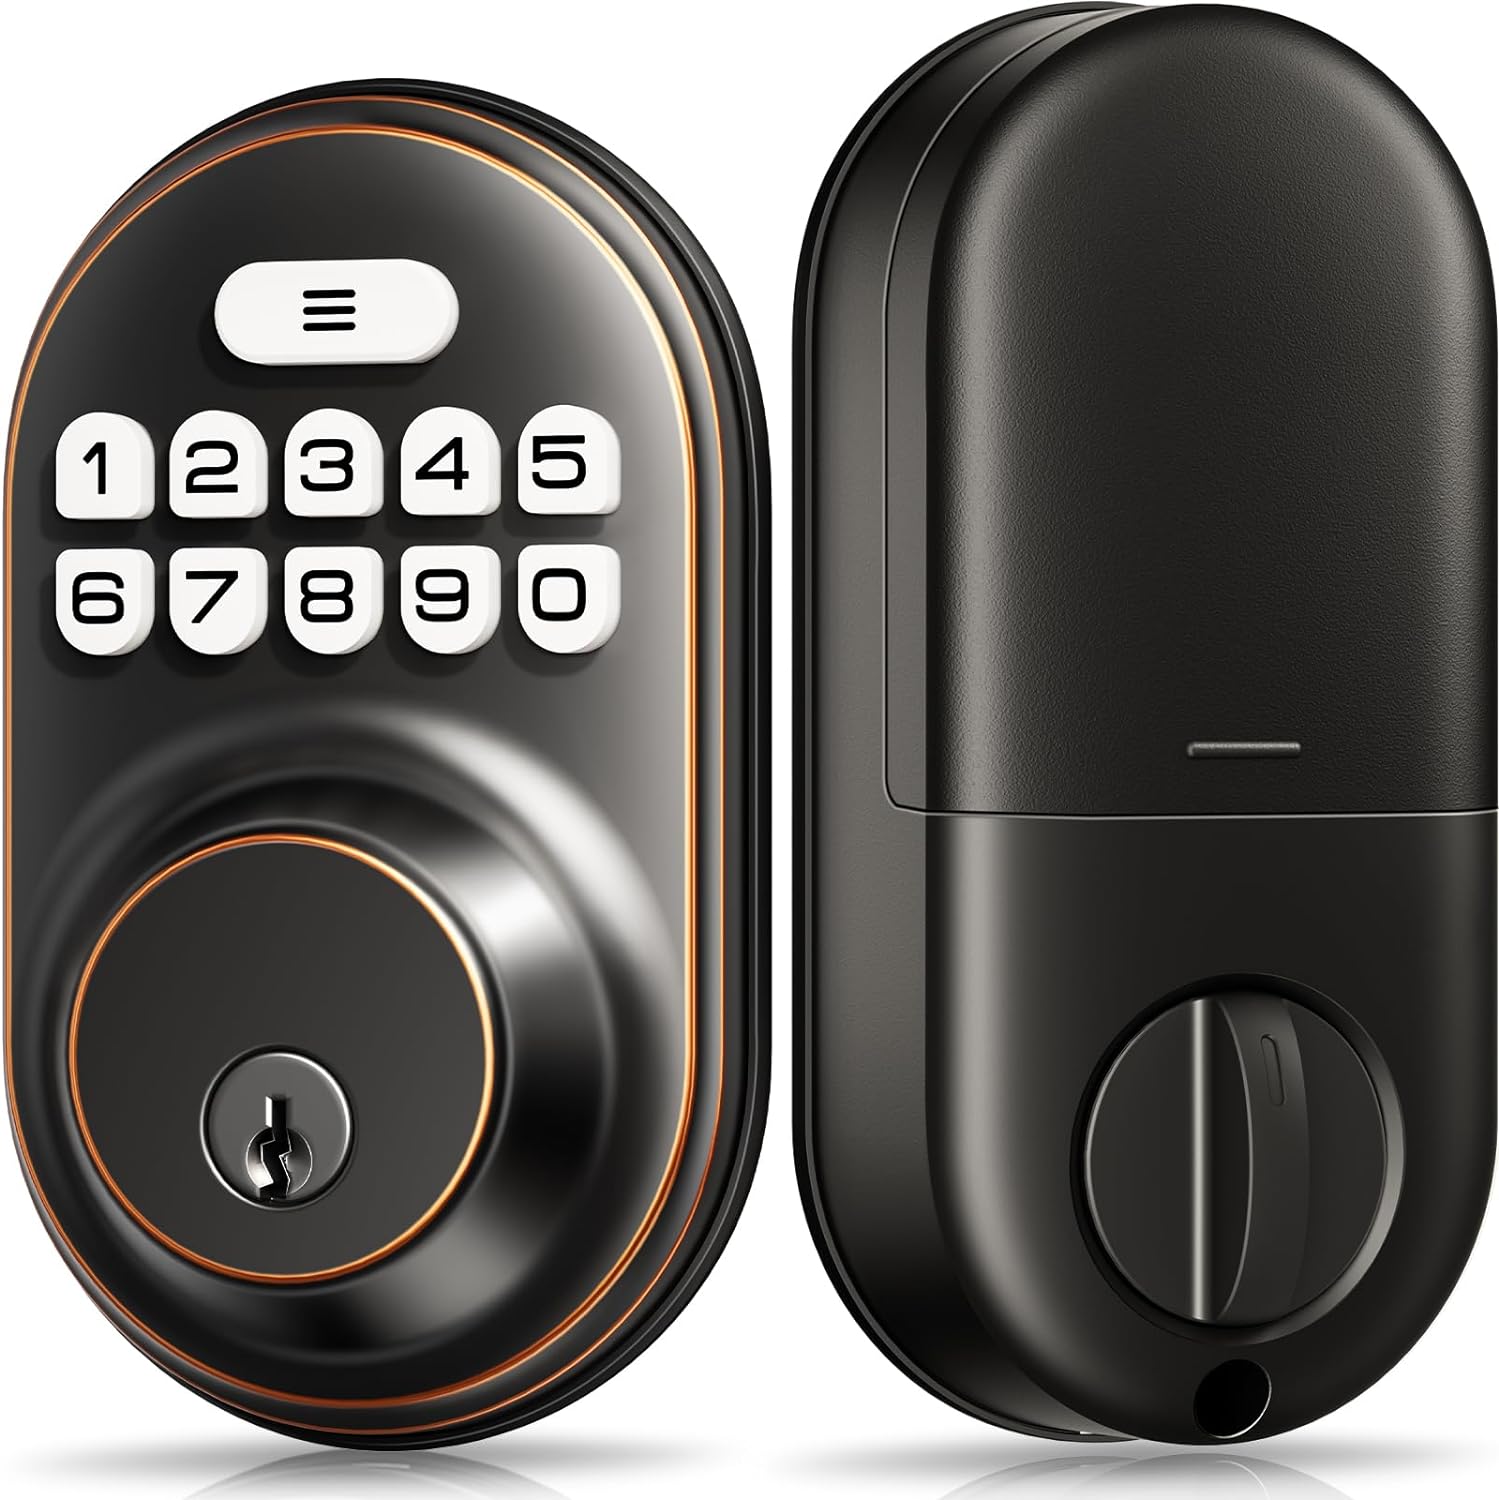 Veise RZ-A Keyless Entry Door Lock, Electronic Keypad Deadbolt, Keyed Entry, Auto Lock, Anti-Peeking Password, Back Lit & Easy Installation Design